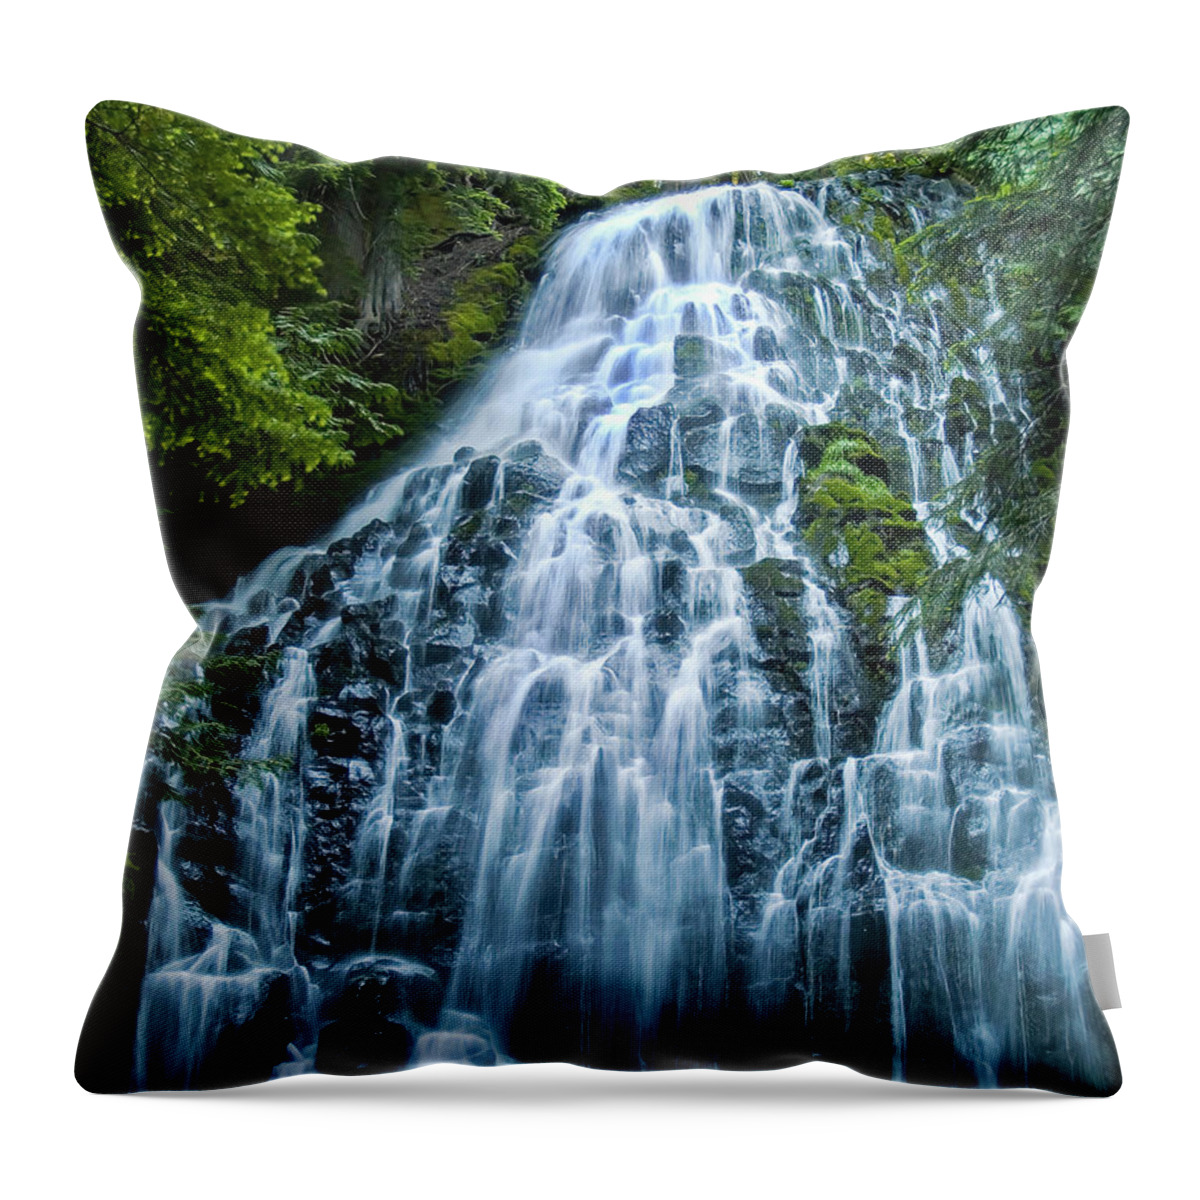 Landscape Throw Pillow featuring the photograph Ramona Falls Cascade #1 by Steven Clark